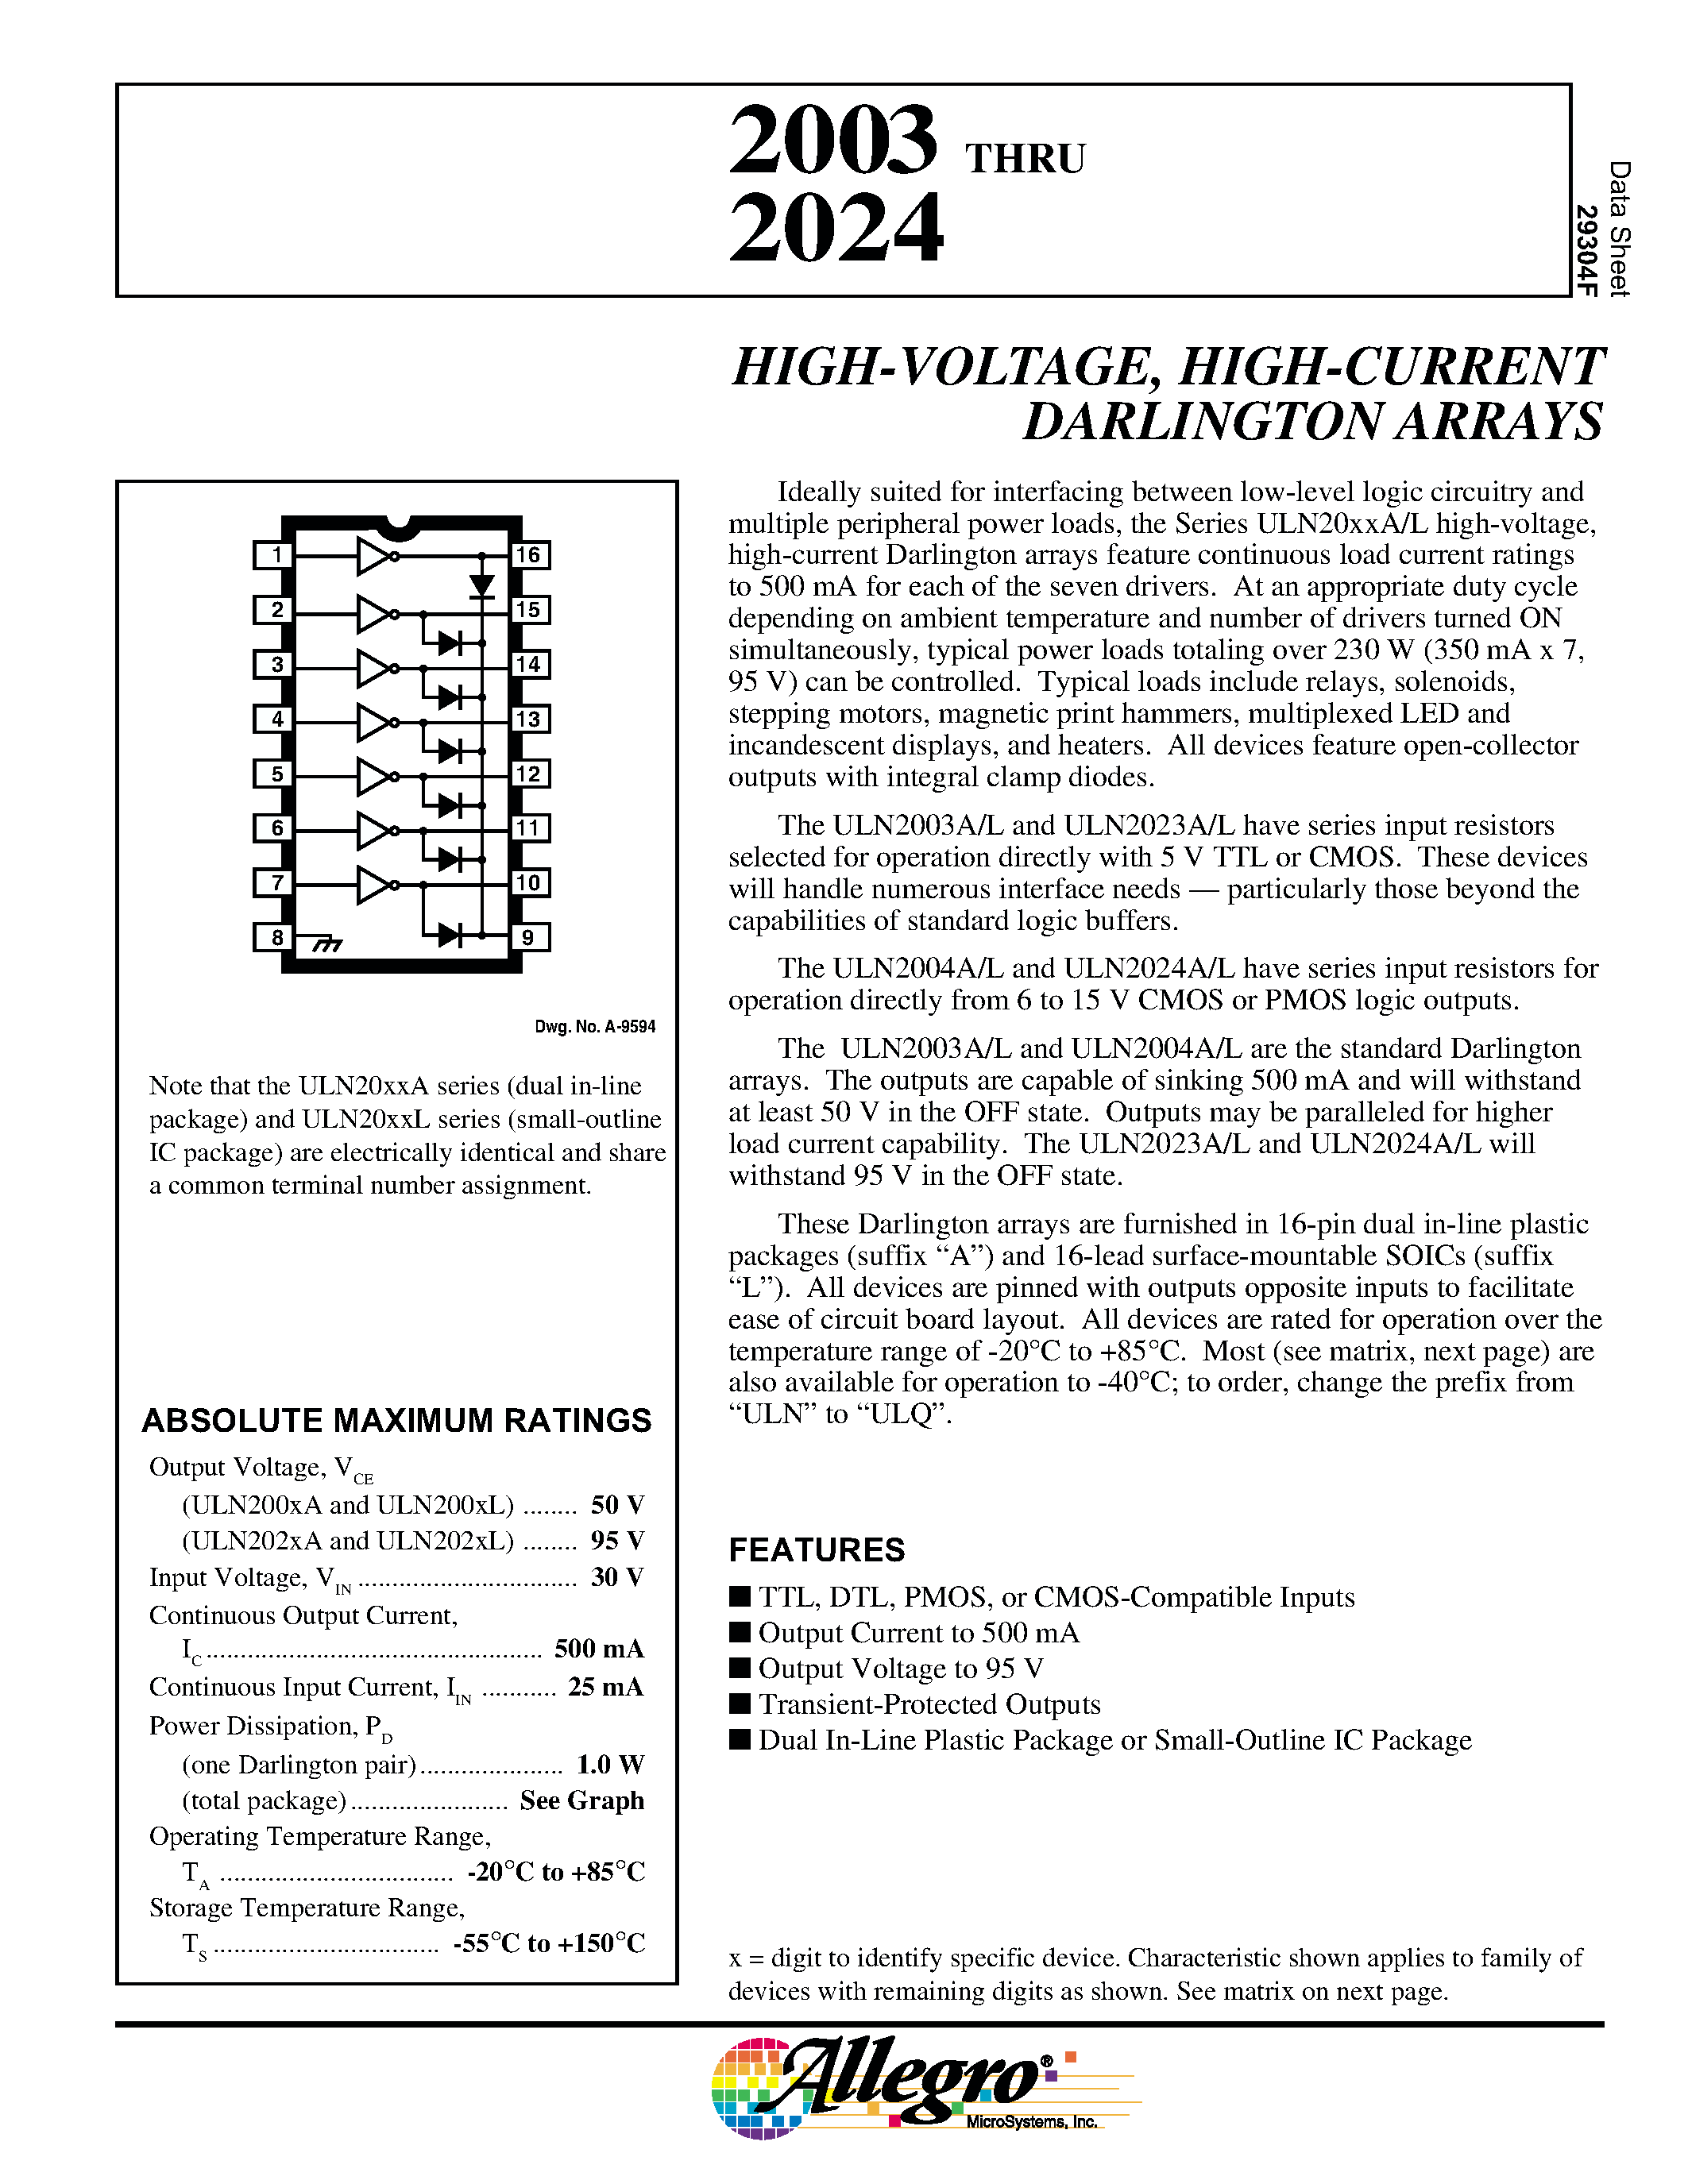 Datasheet ULN2024A - HIGH-VOLTAGE/ HIGH-CURRENT DARLINGTON ARRAYS page 1